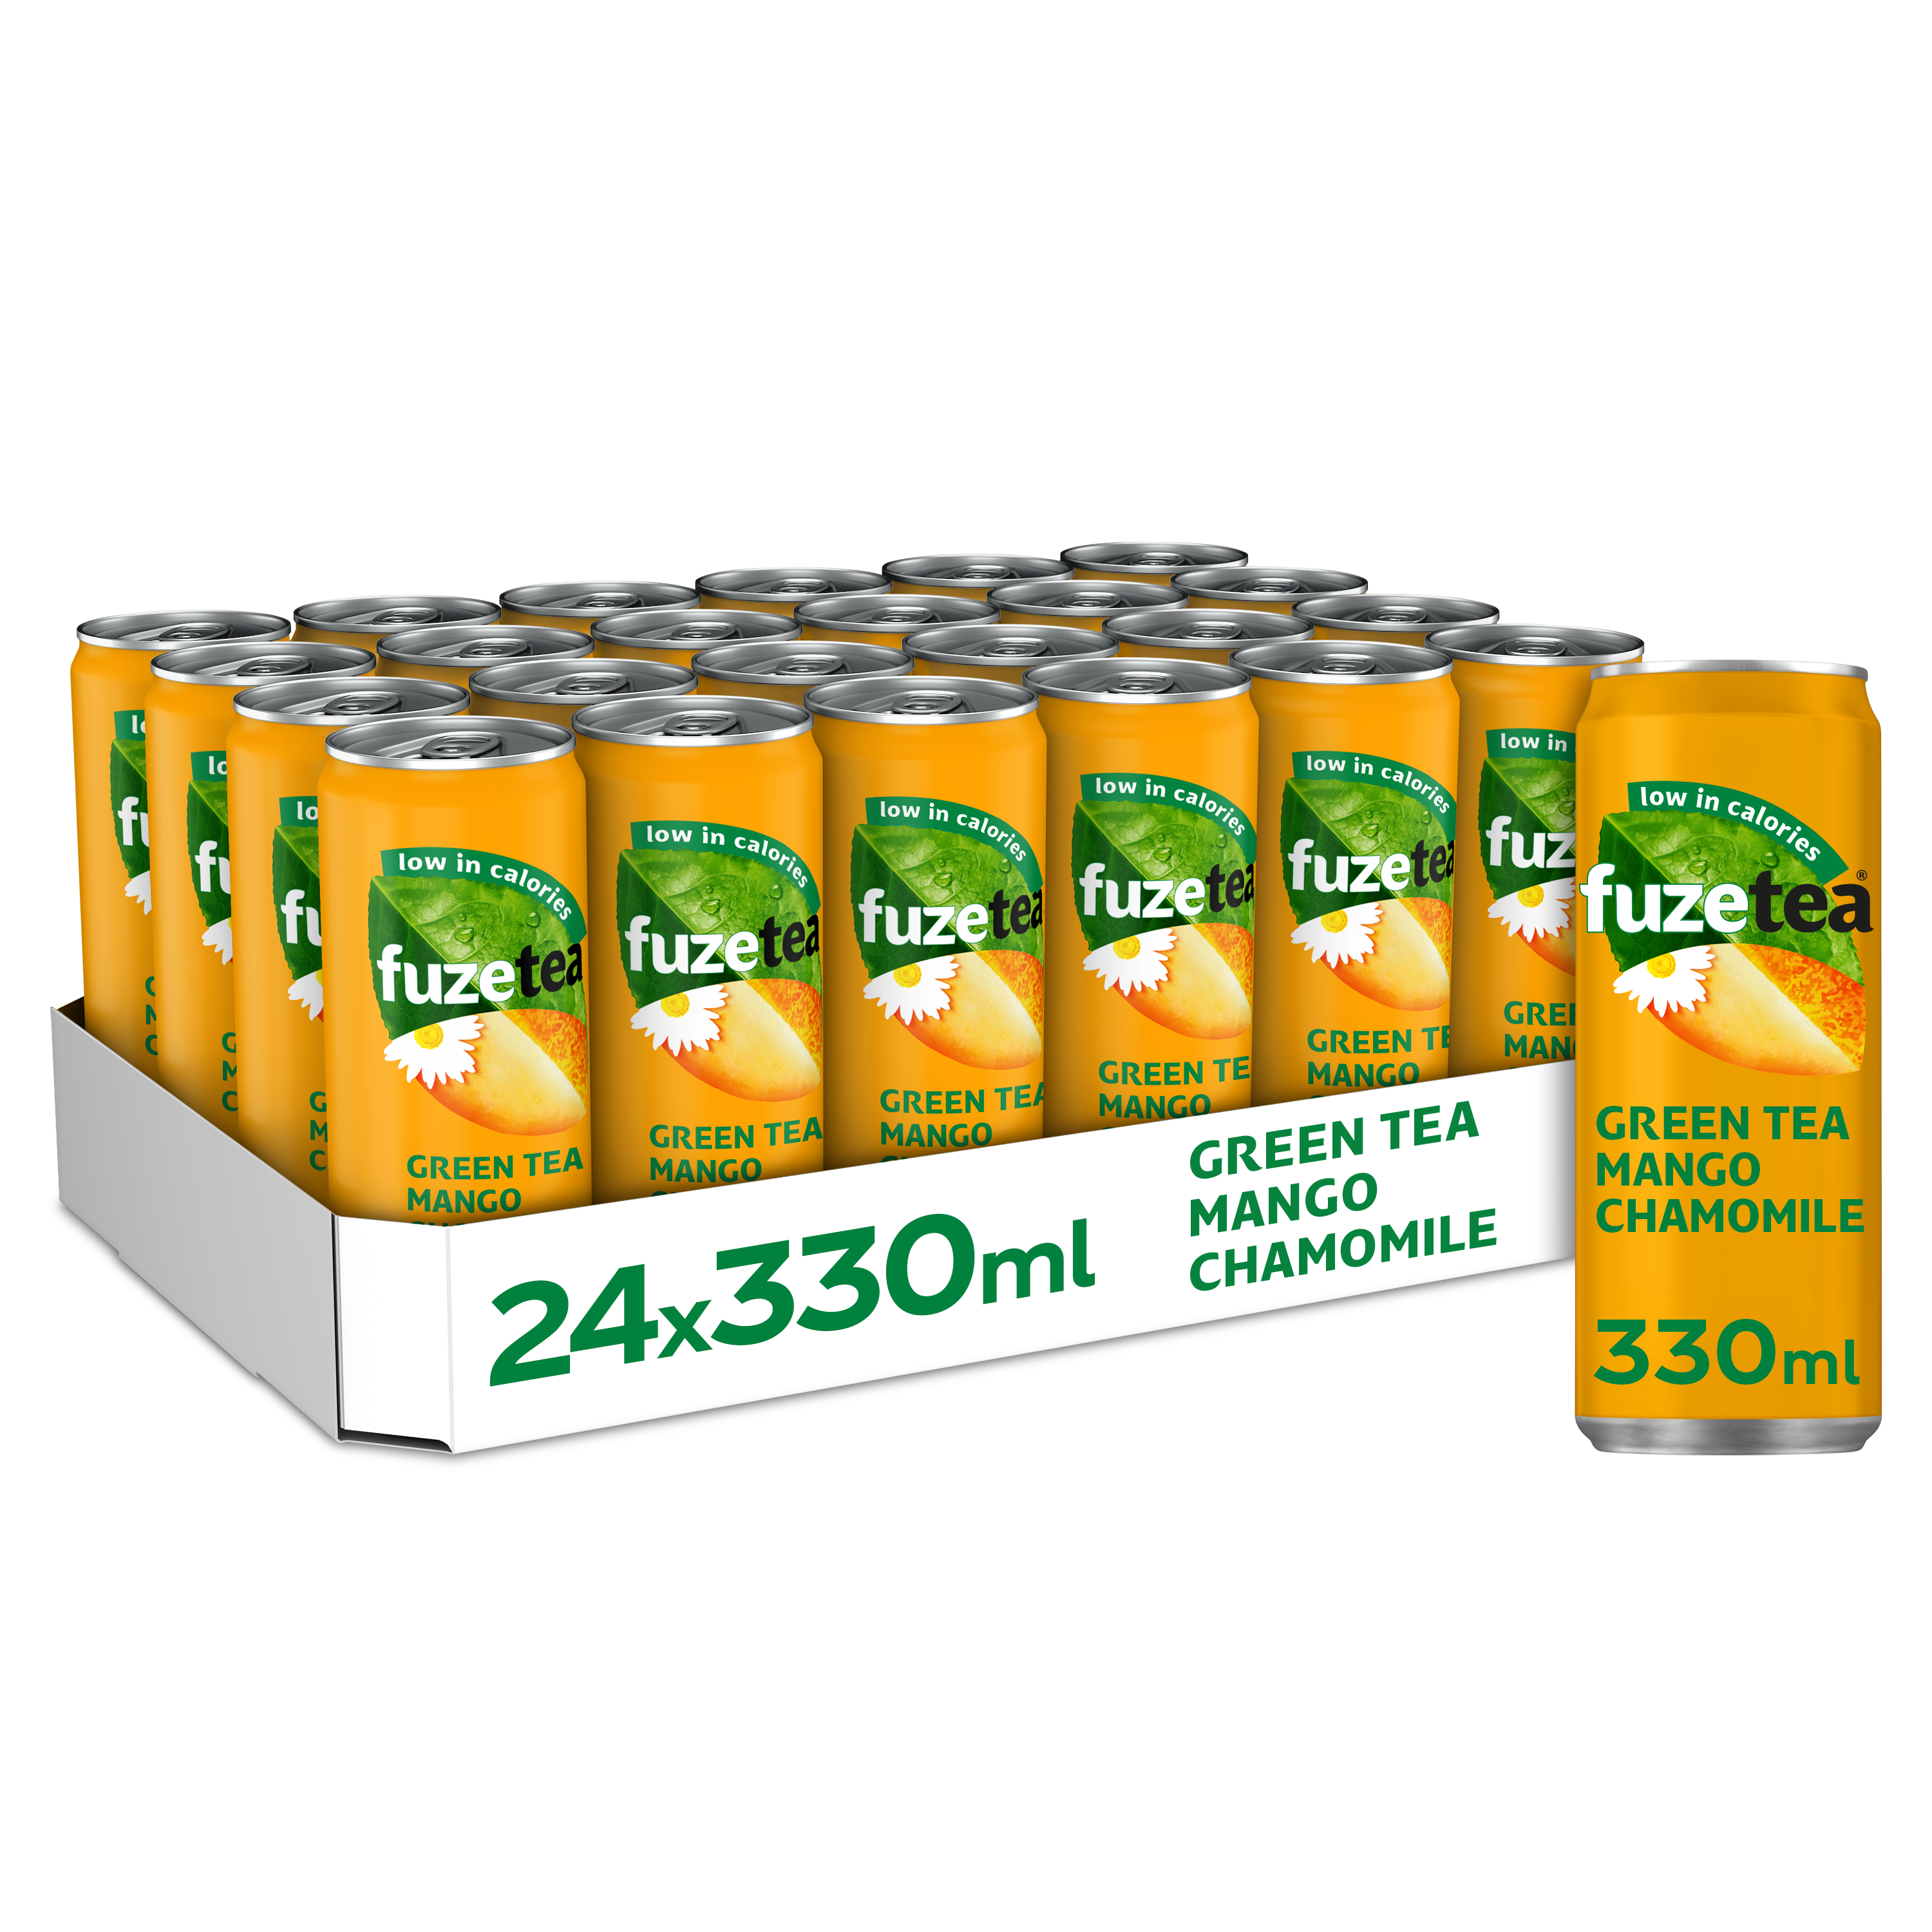 Grüner Tee Mango Kamille, Soda, 0,33 Liter